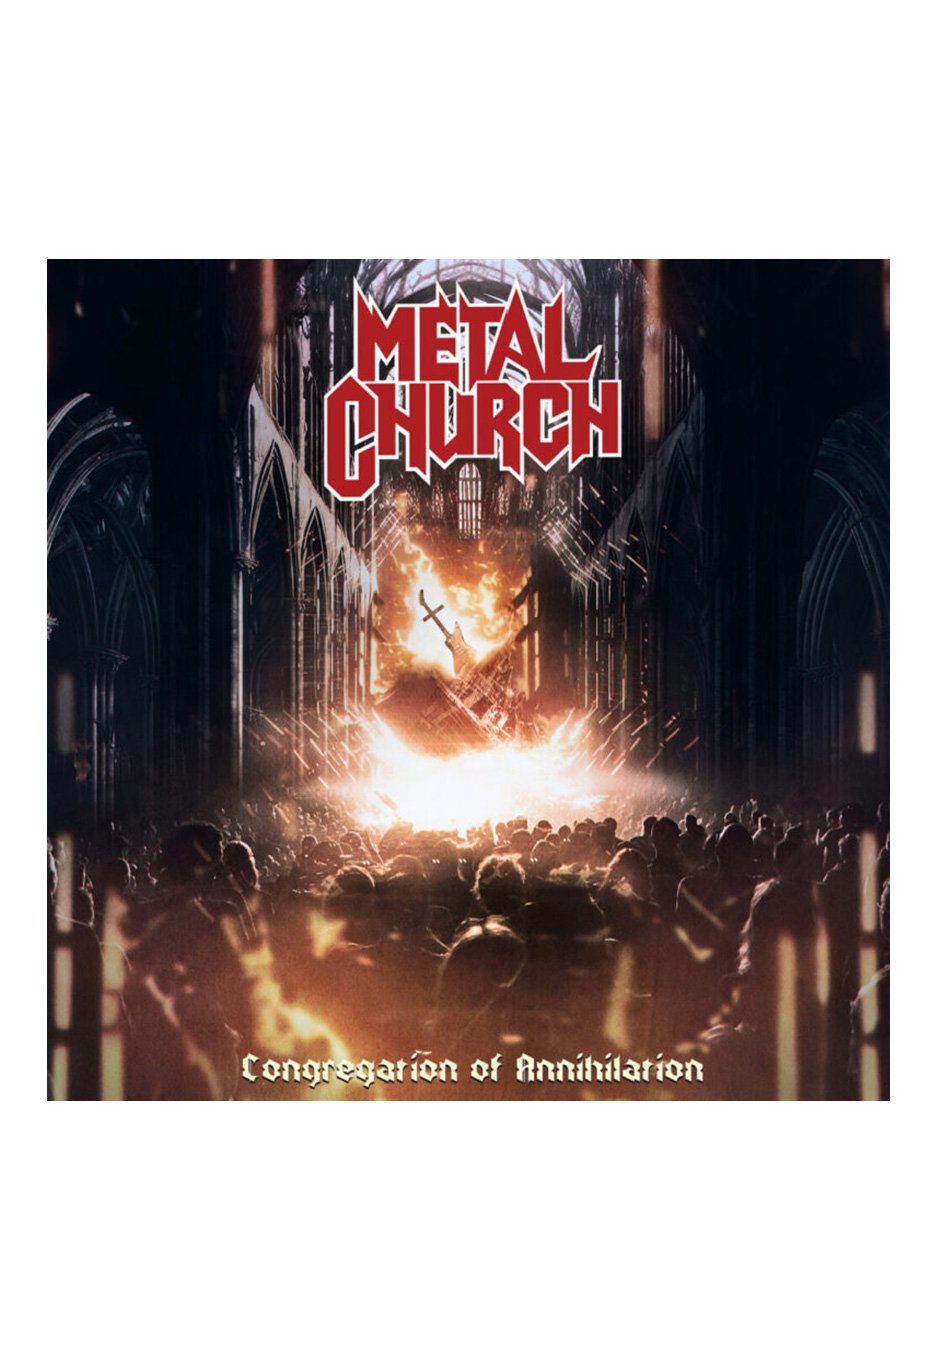 Metal Church - Congregation Of Annihilation - CD